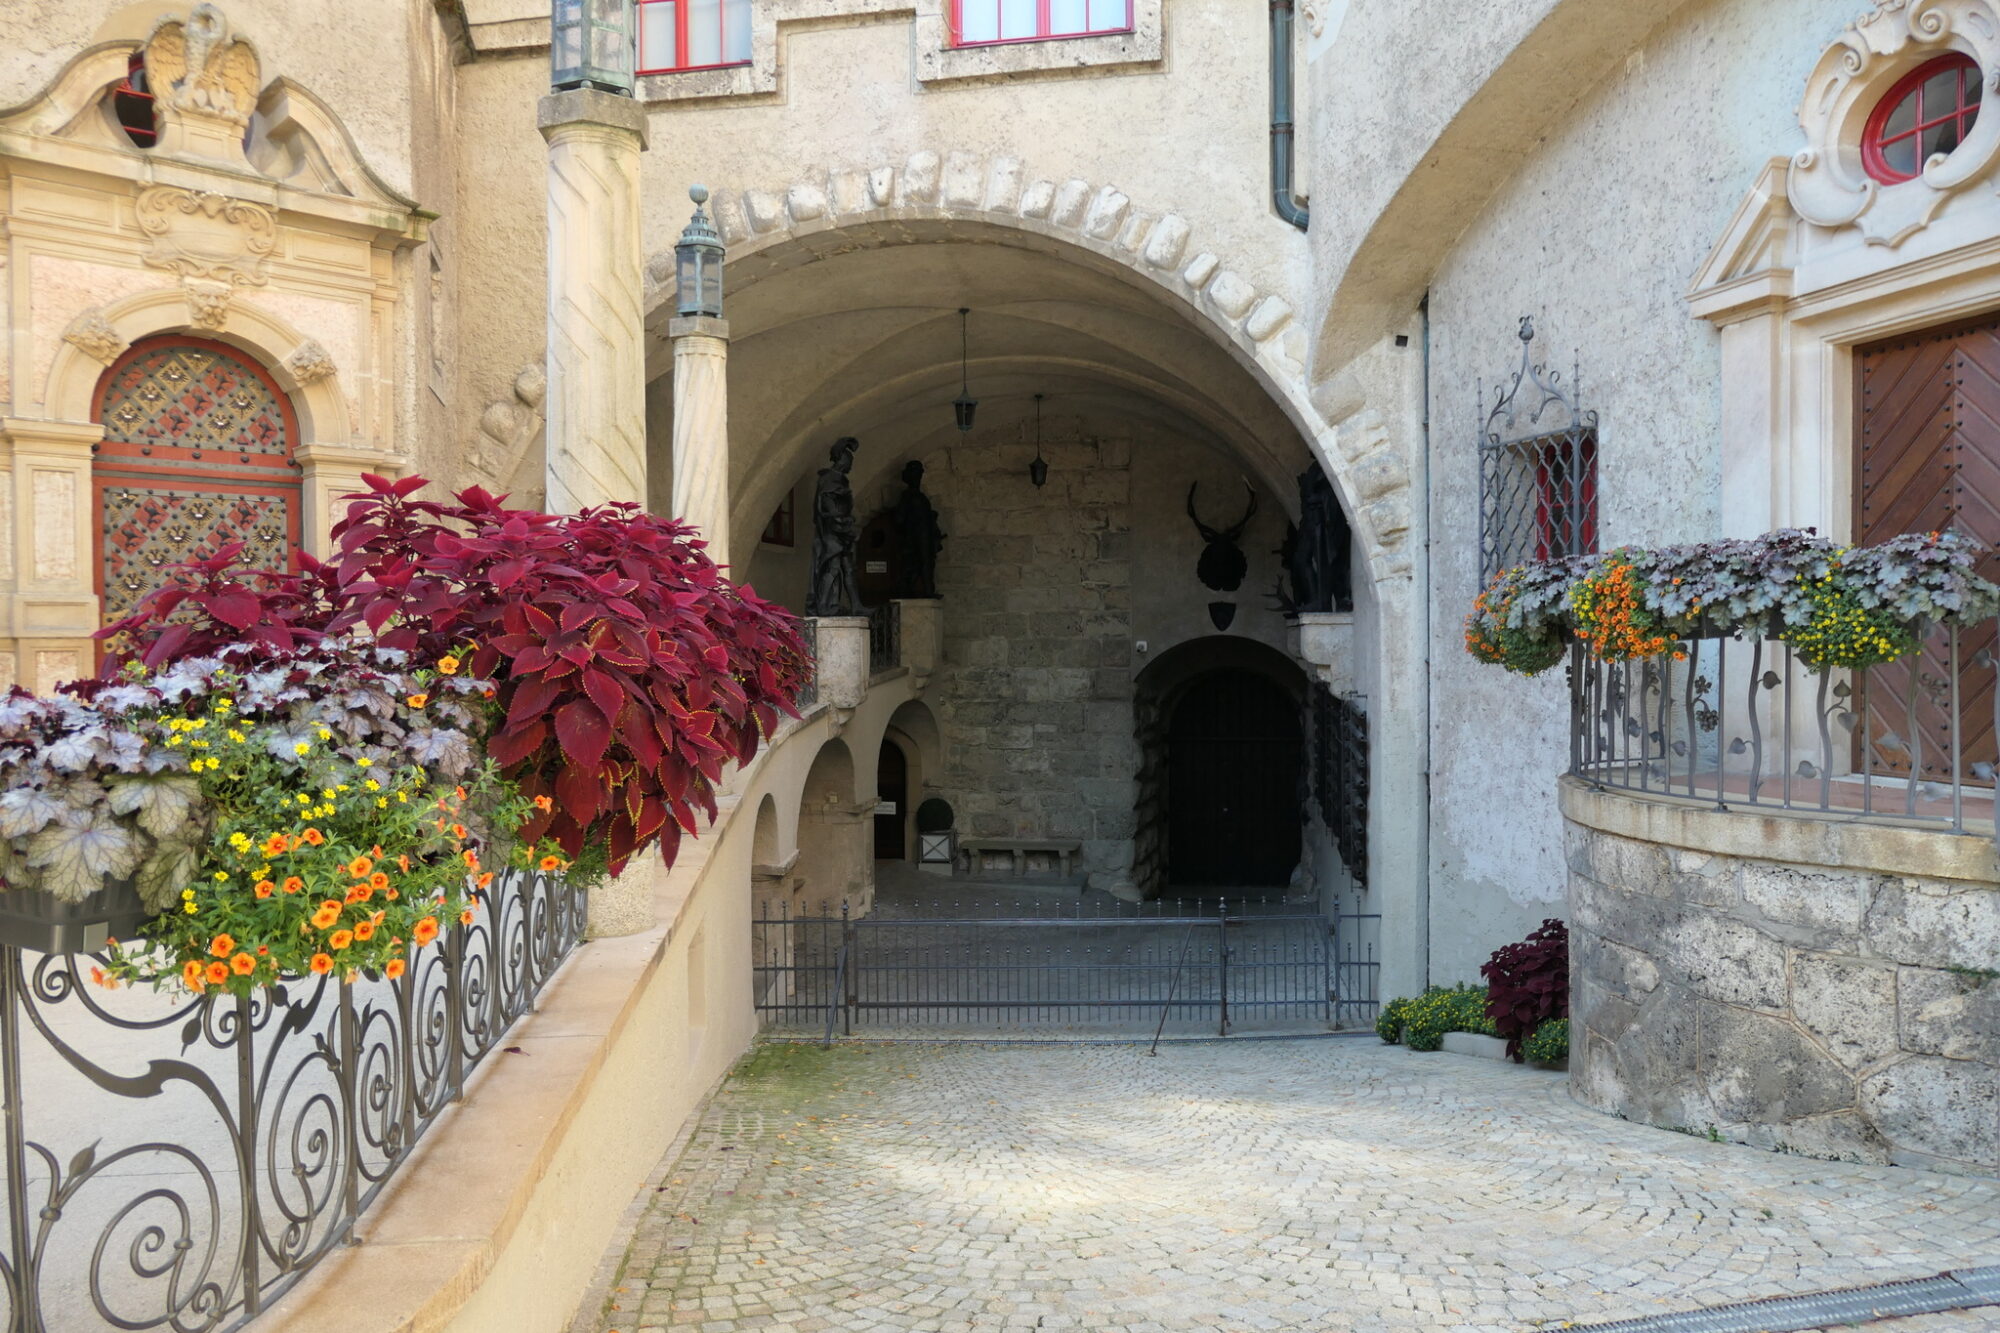 Inner Courtyard at Castle Sigmaringen